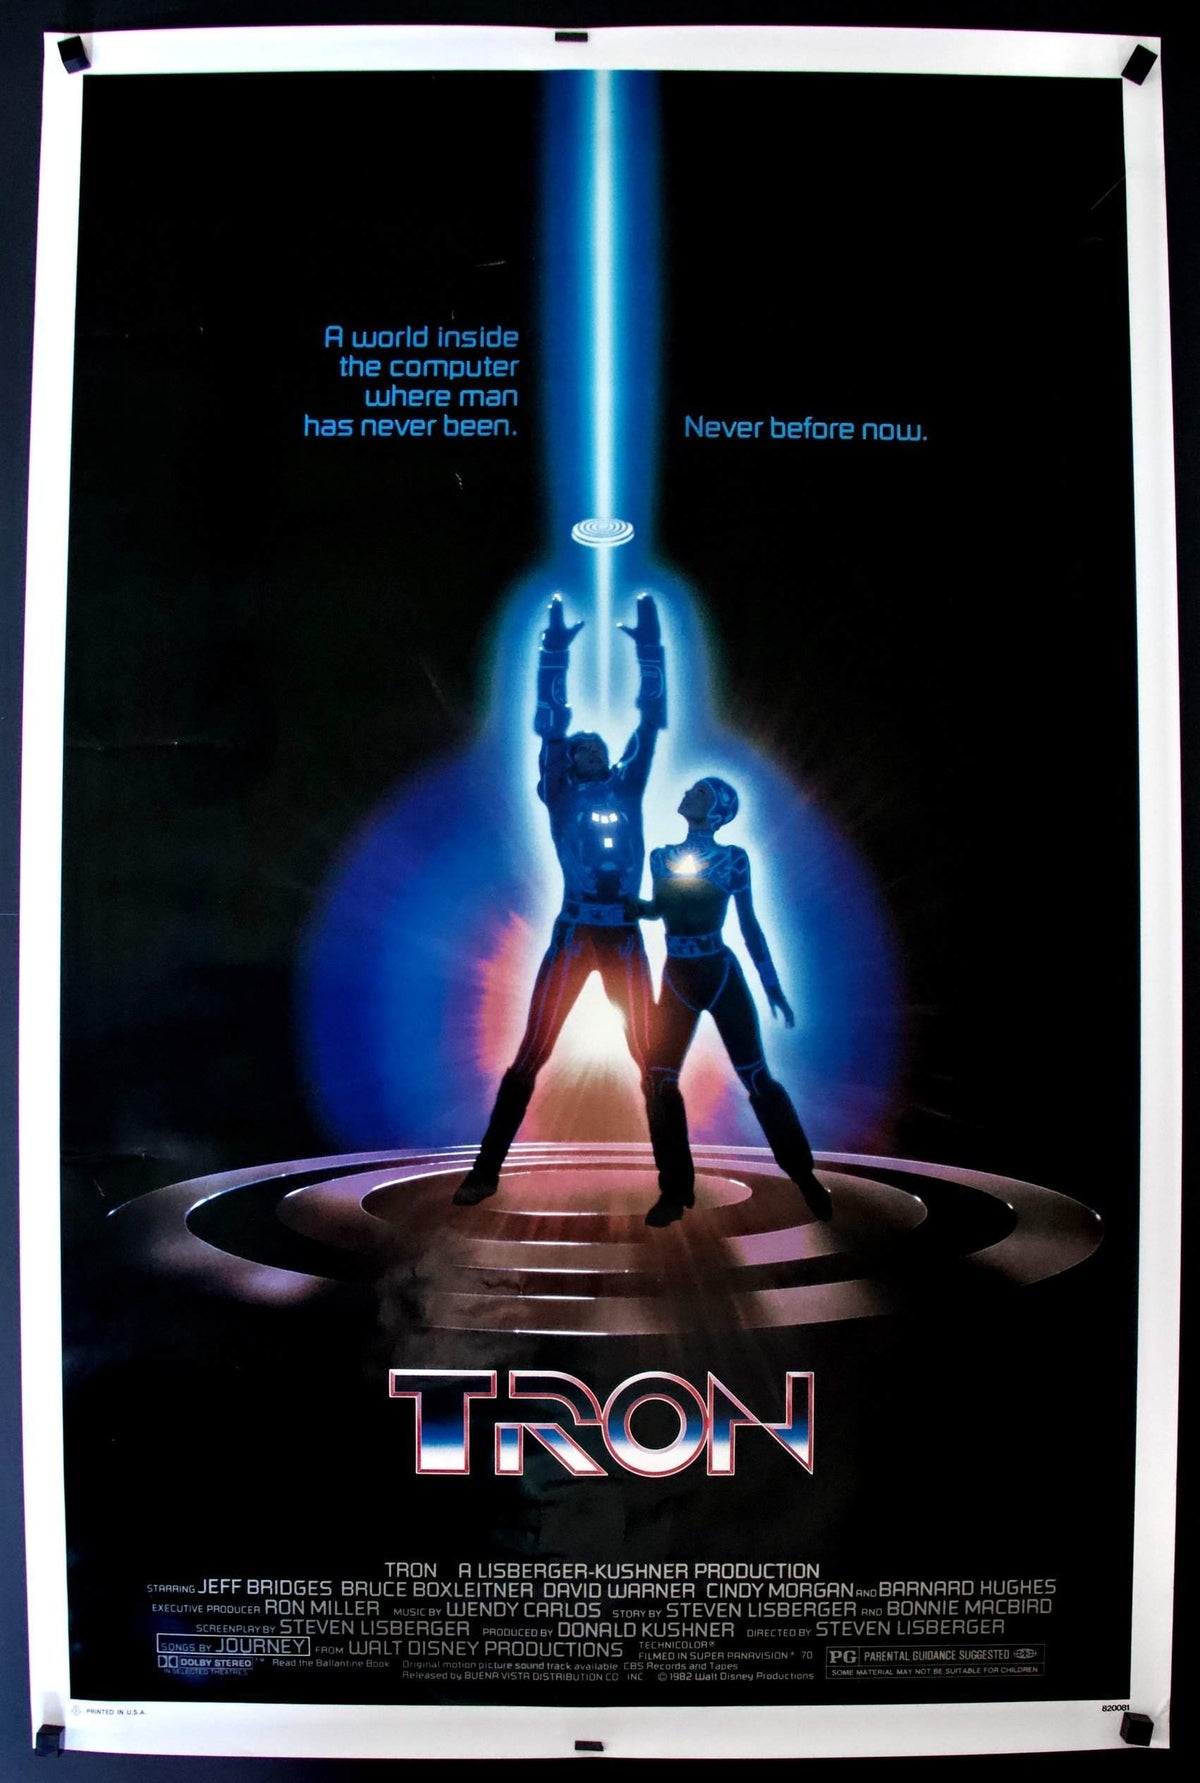 Tron (1982) original movie poster for sale at Original Film Art